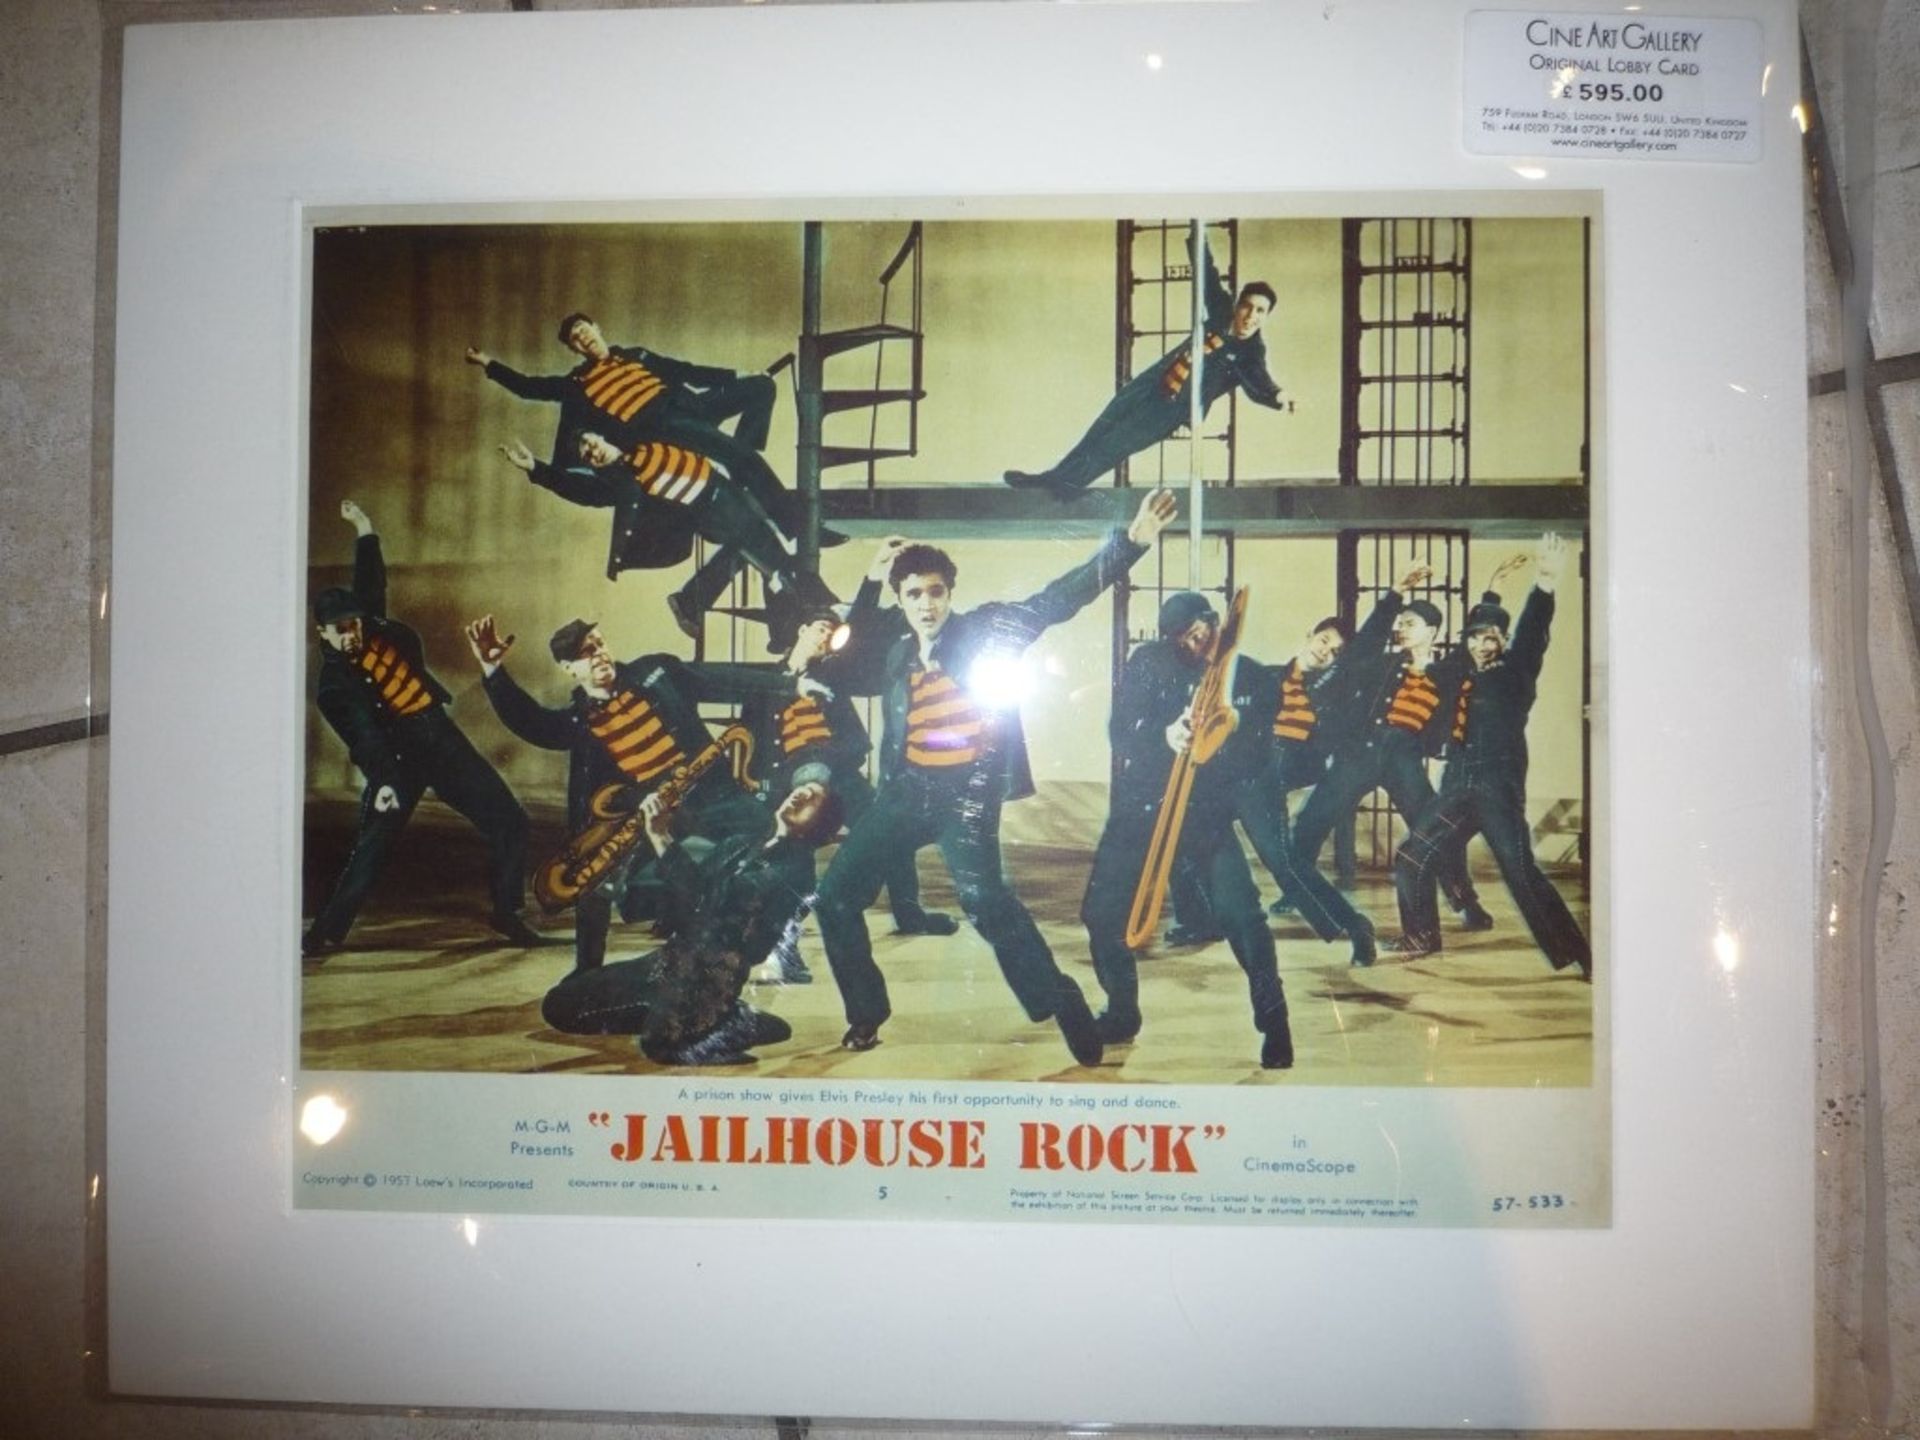 Jailhouse Rock lobby card - Image 2 of 2